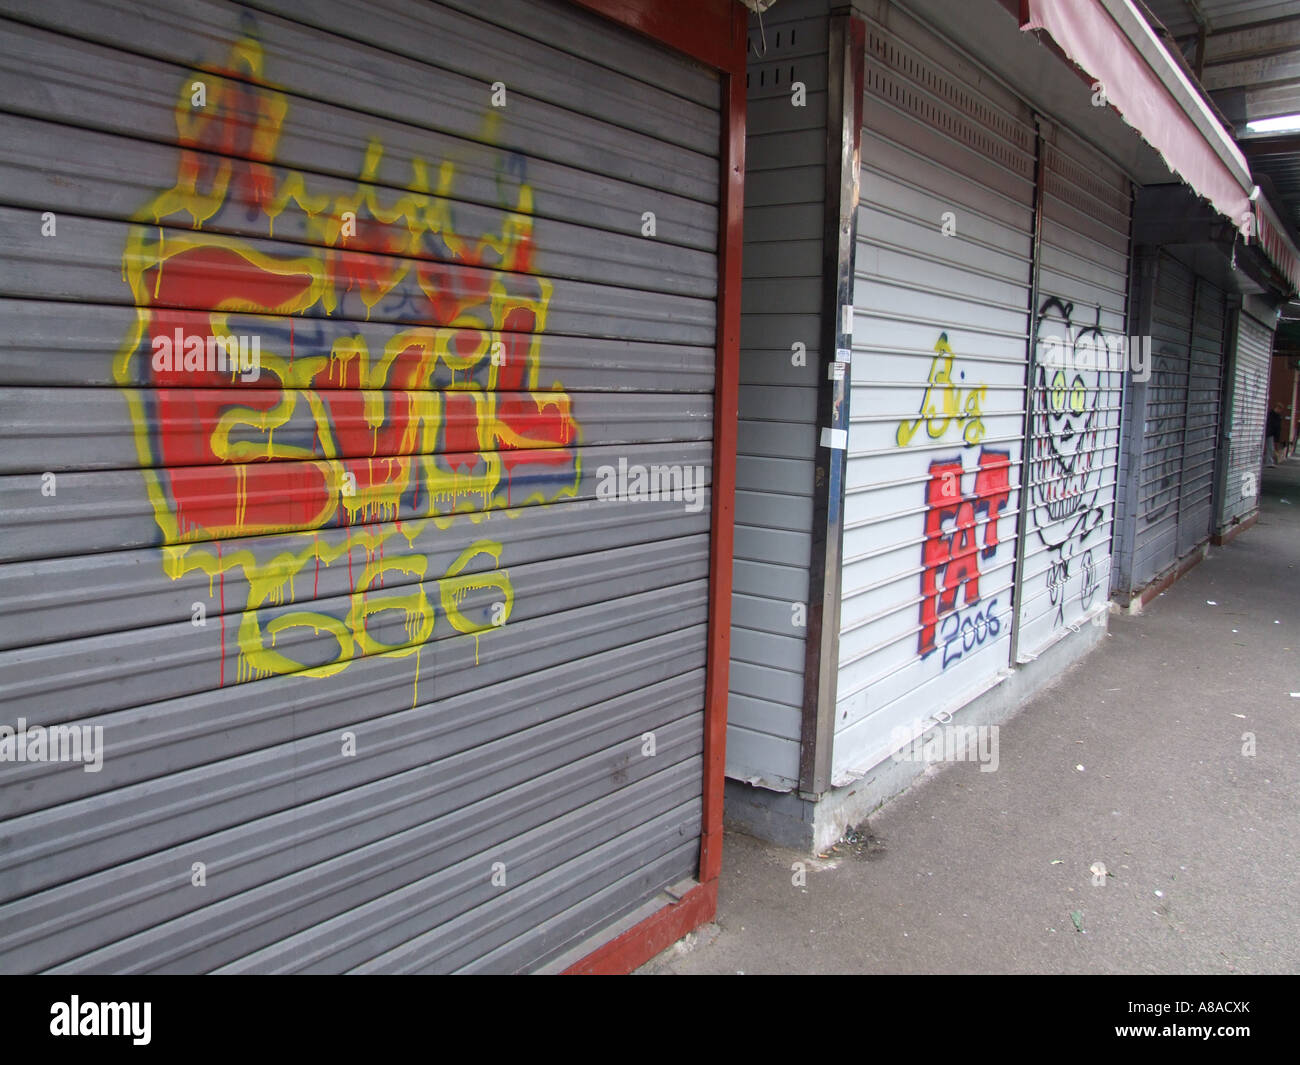 graffiti on market stall Stock Photo